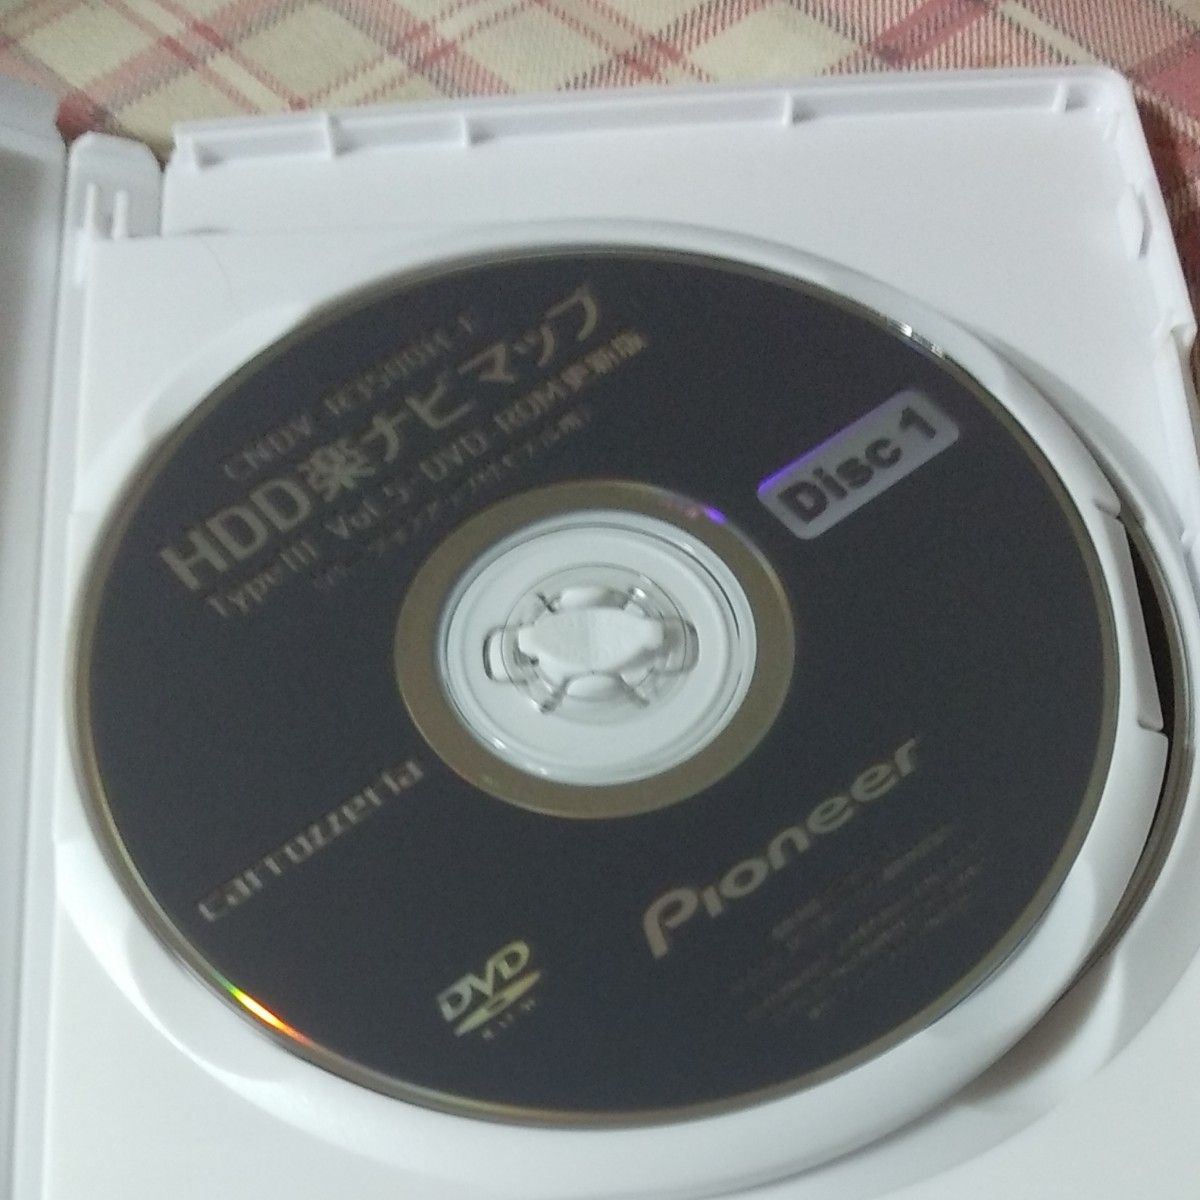 carrozzeria カロッツェリア　HDD楽ナビマップ　DVD-ROM　4枚セット　バラ売り不可　値引き不可